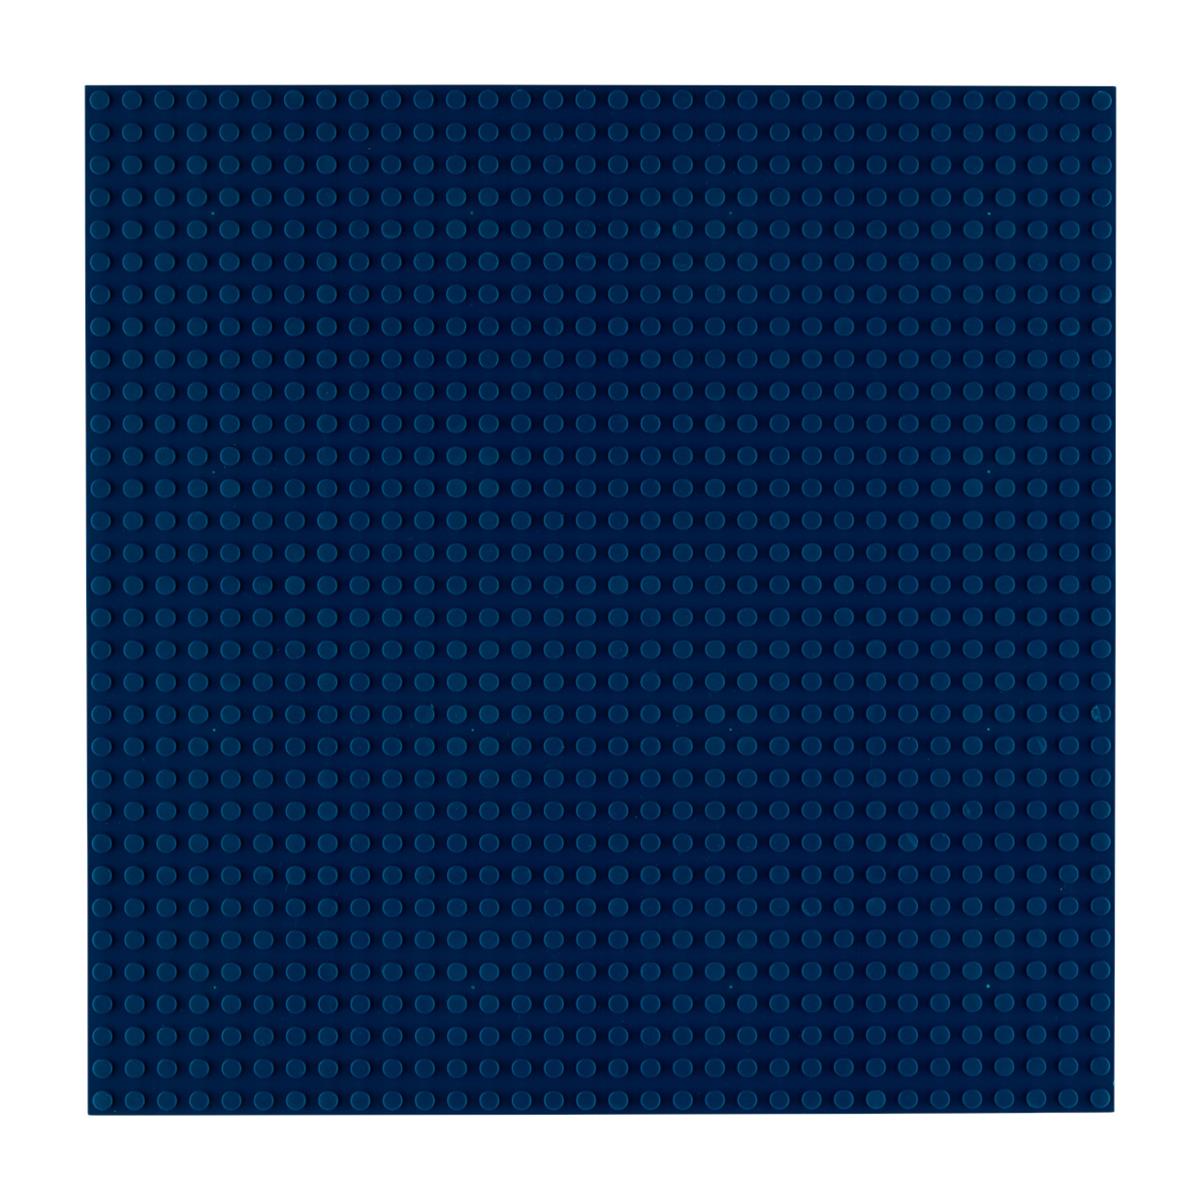 OB-P32EB1 - Baseplate 32×32 Deep Blue